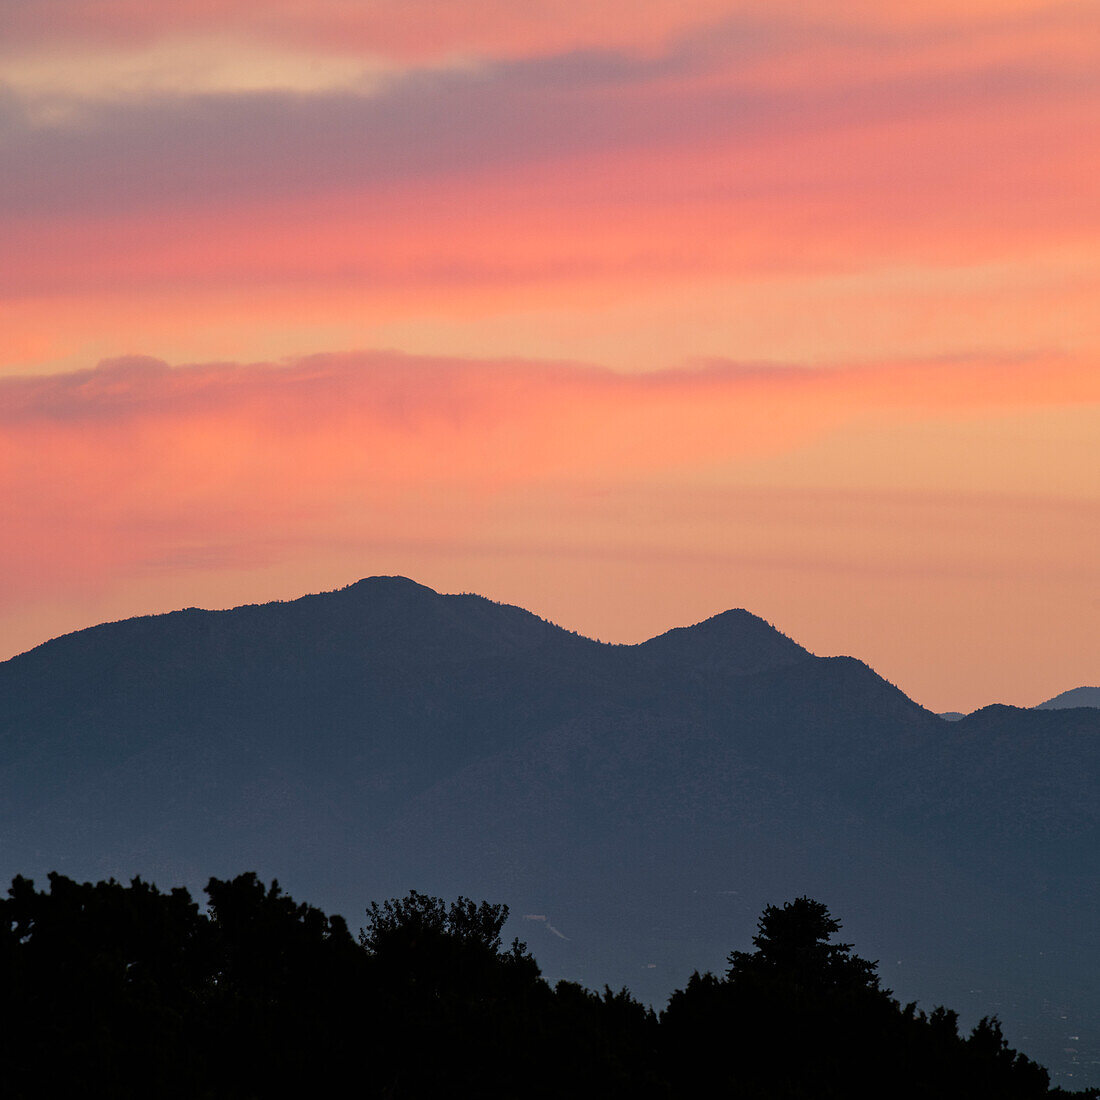 USA, New Mexico, Sandia Mountains von Santa Fe, farbenfroher Himmel über den Sandai Mountains bei Sonnenuntergang